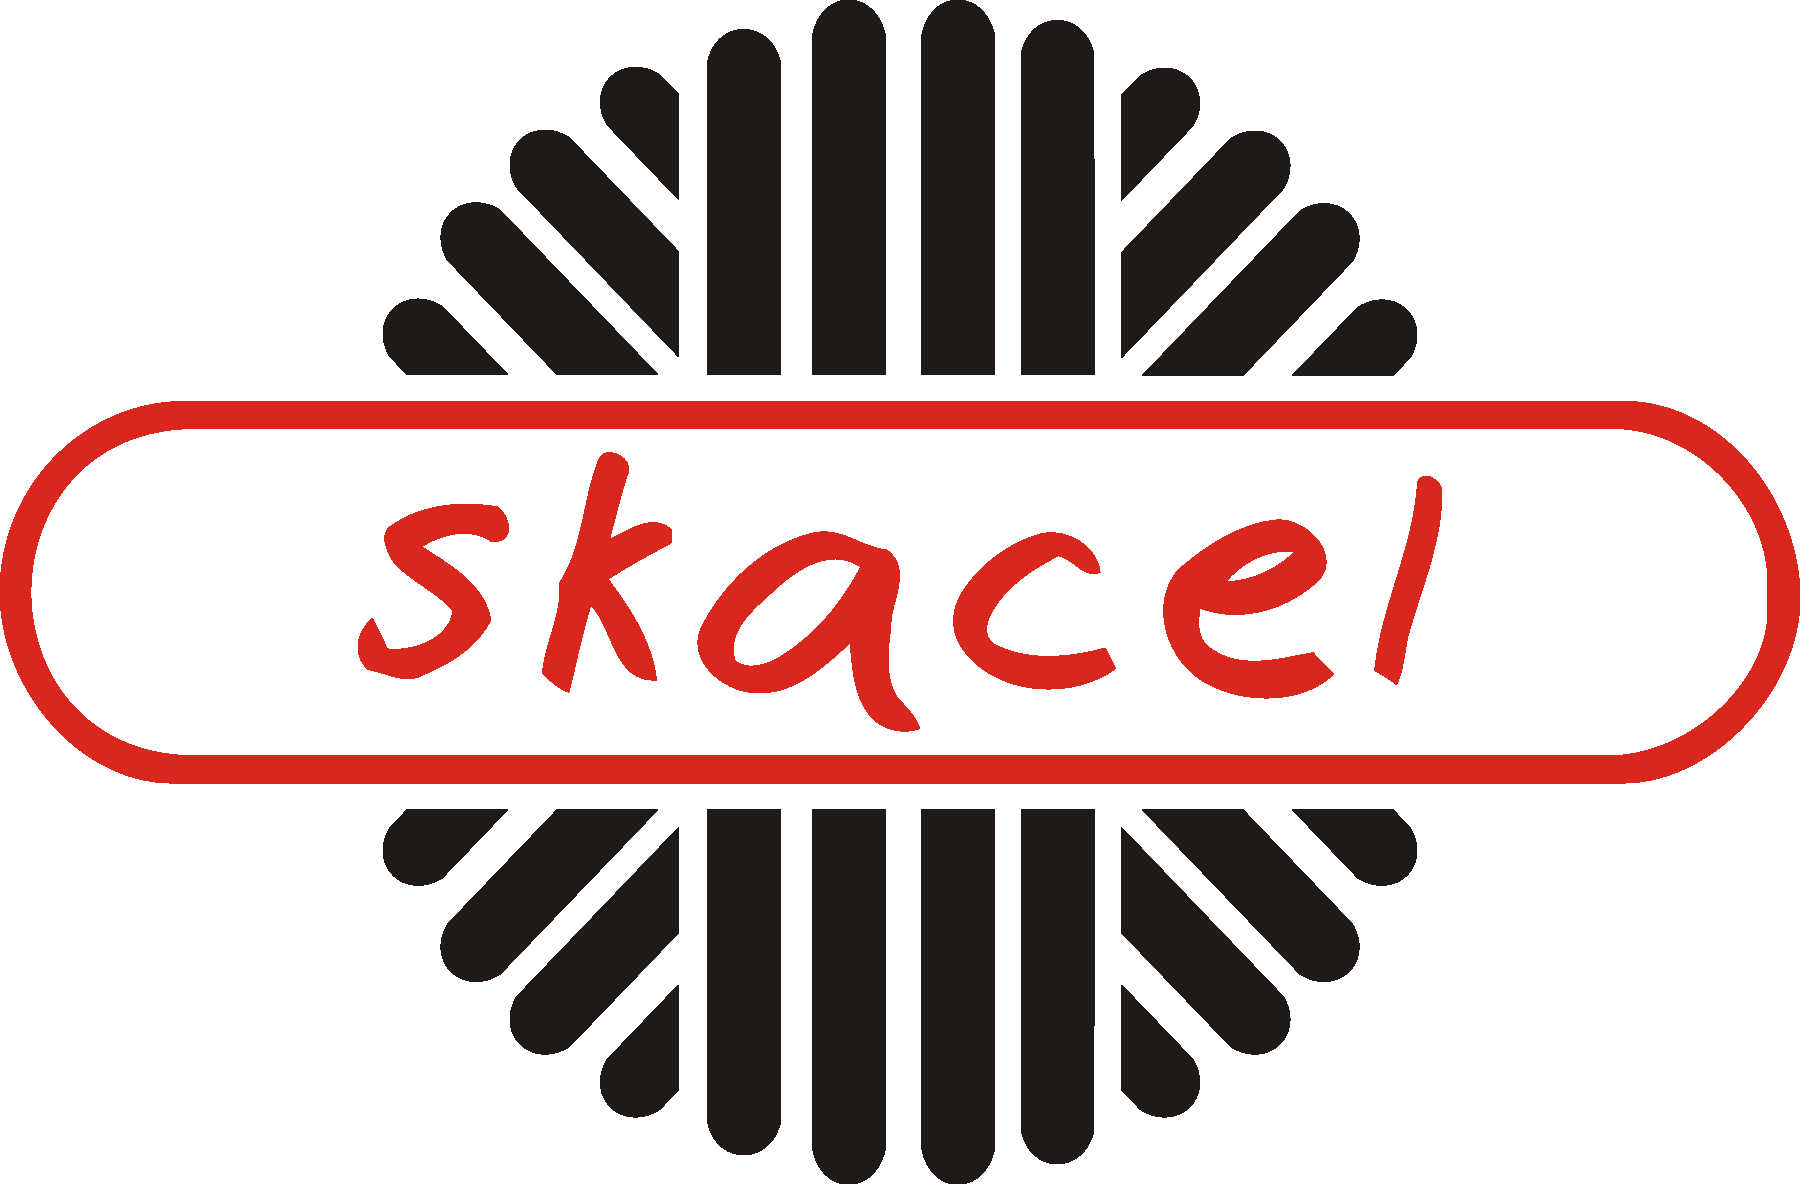 Skacel Collection, Inc.